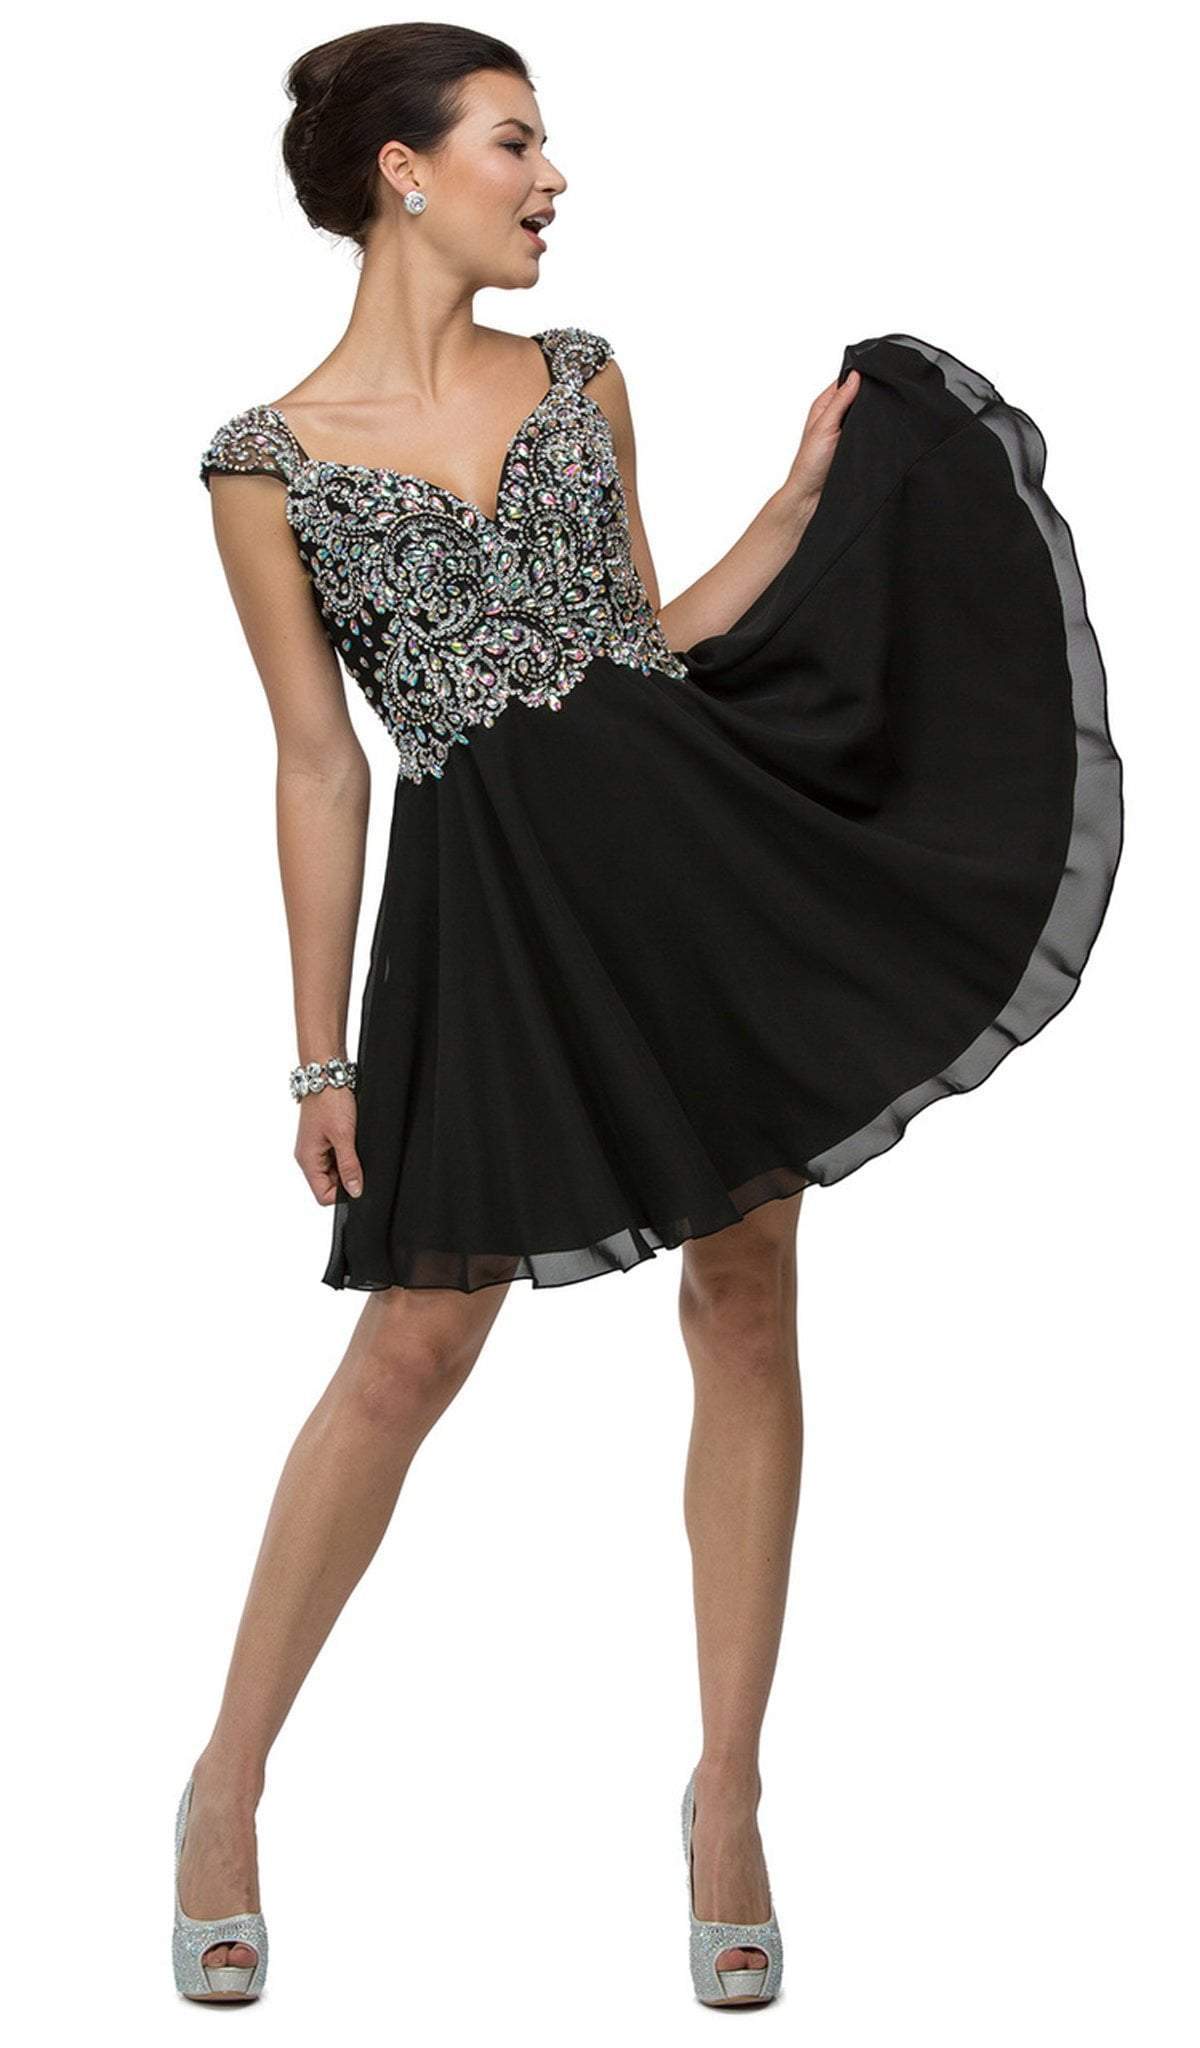 Dancing Queen - 9160 Cap Sleeve Adorned Sweetheart A-Line Cocktail Dress